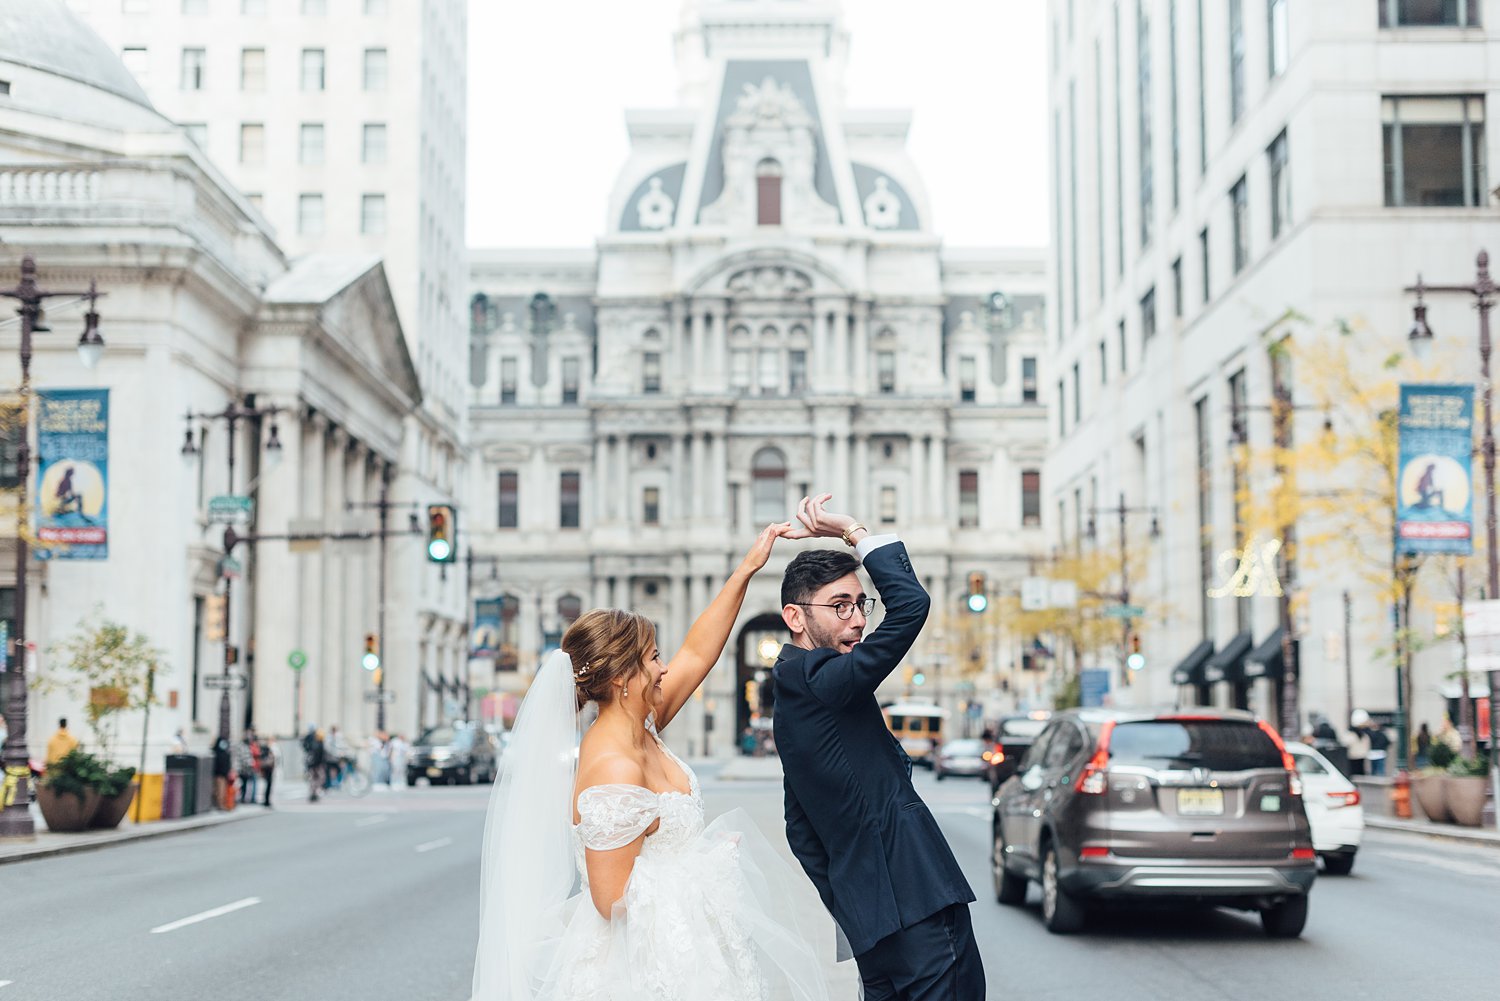 Jennifer + Jeffrey - City Hall Wedding - Maryland Wedding Photographer - Alison Dunn Photography photo